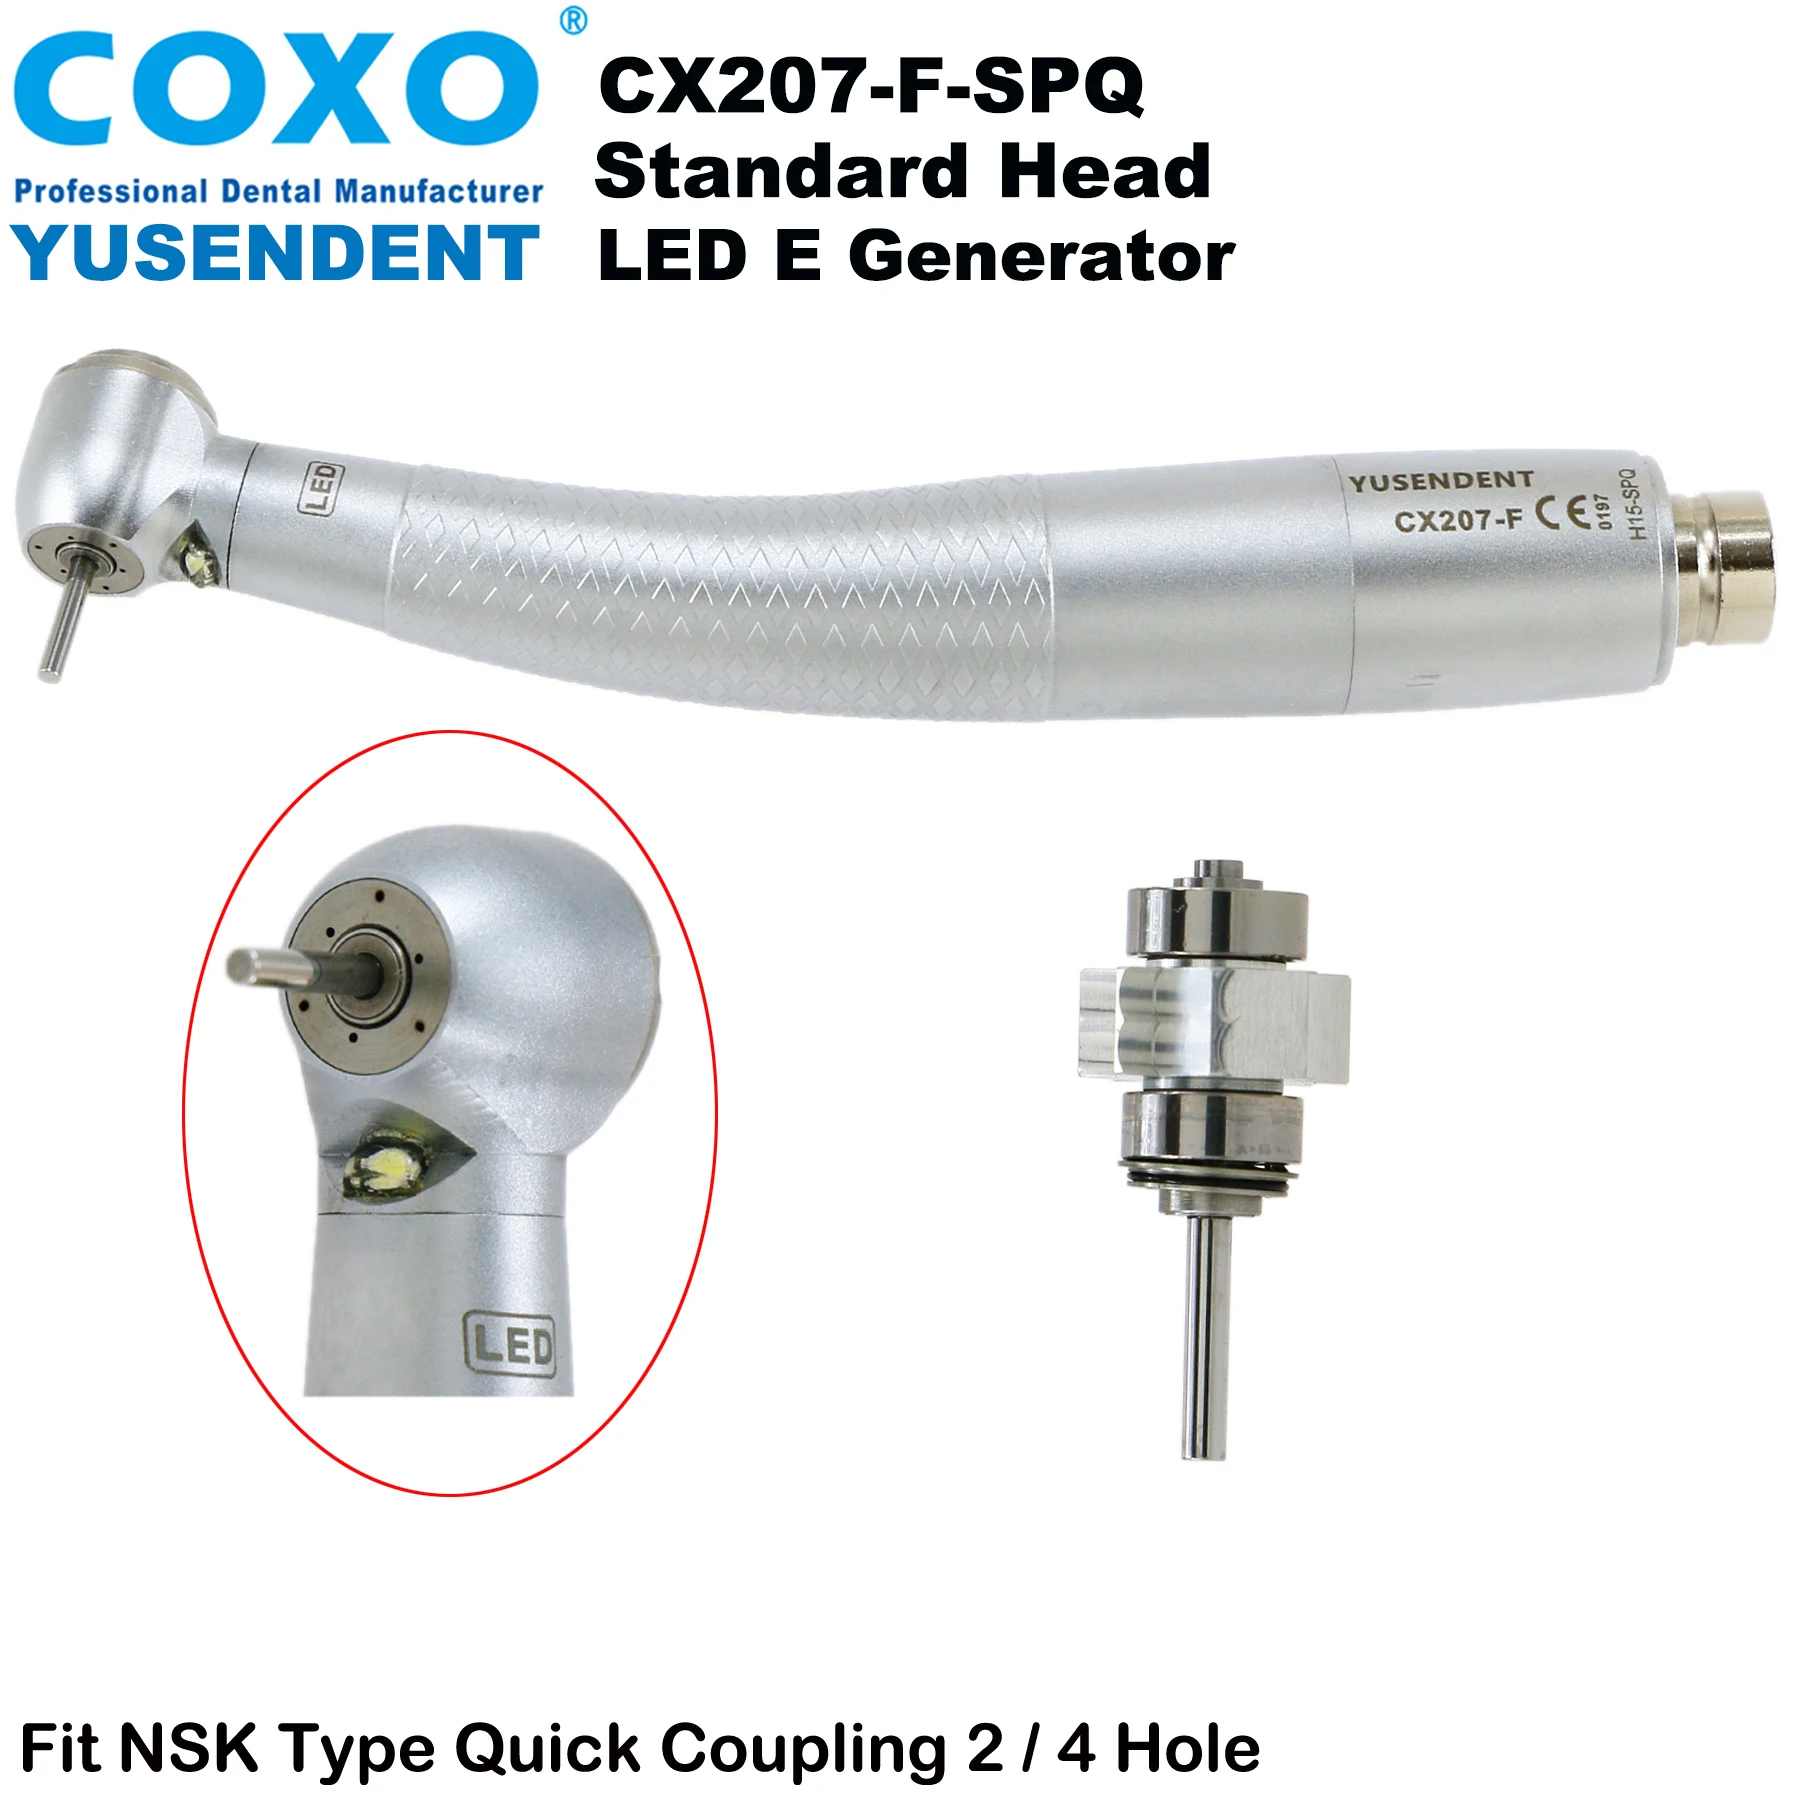 

COXO CX207-F-SPQ Dental Self-Power LED High Speed Turbine Standard Head Handpiece Fit NSK